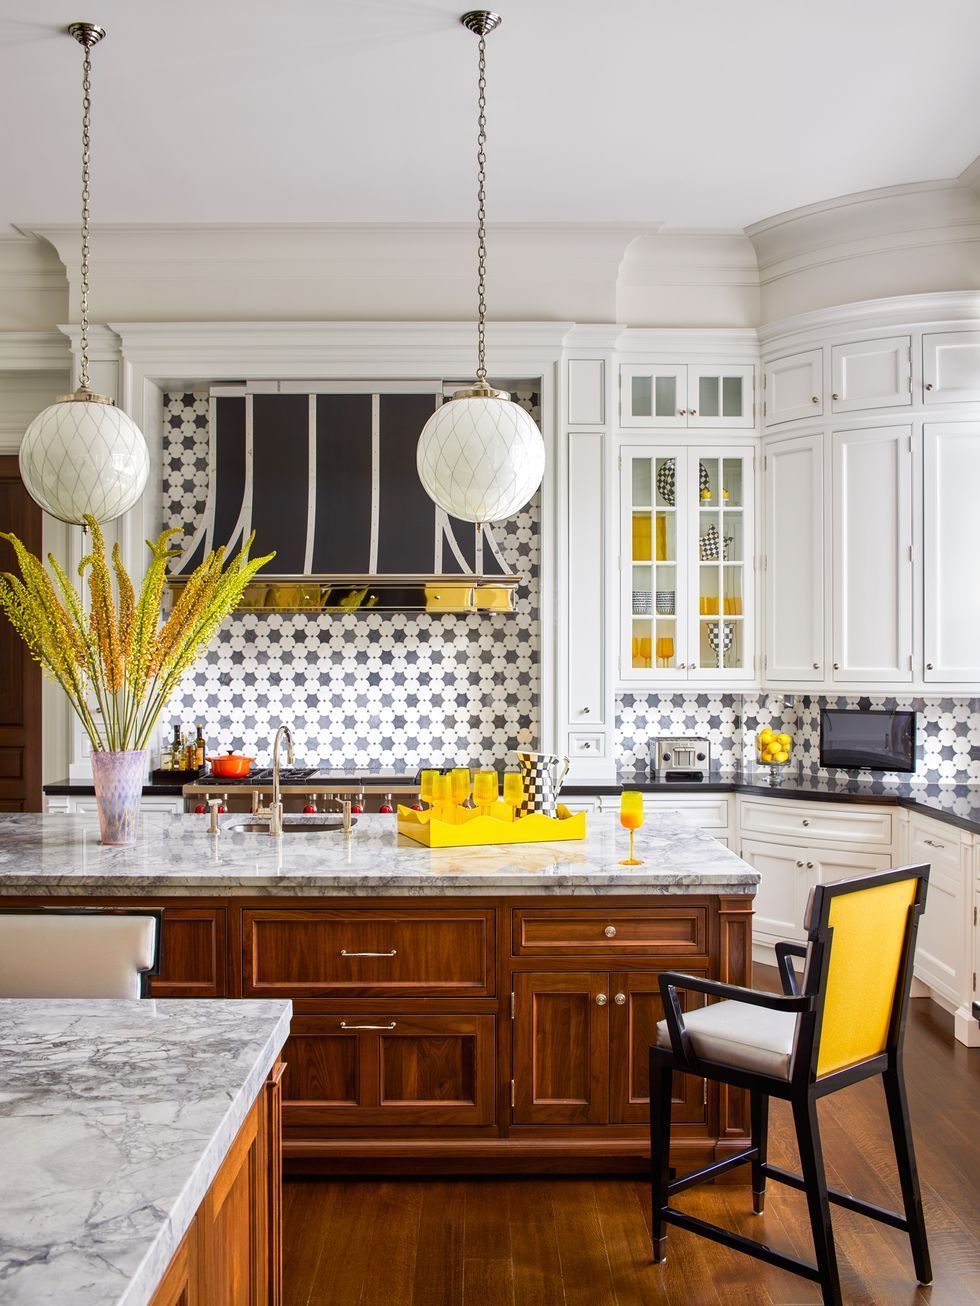 51 Gorgeous Kitchen Backsplash Ideas, Ceramic Tile Backsplash Designs Patterns Free